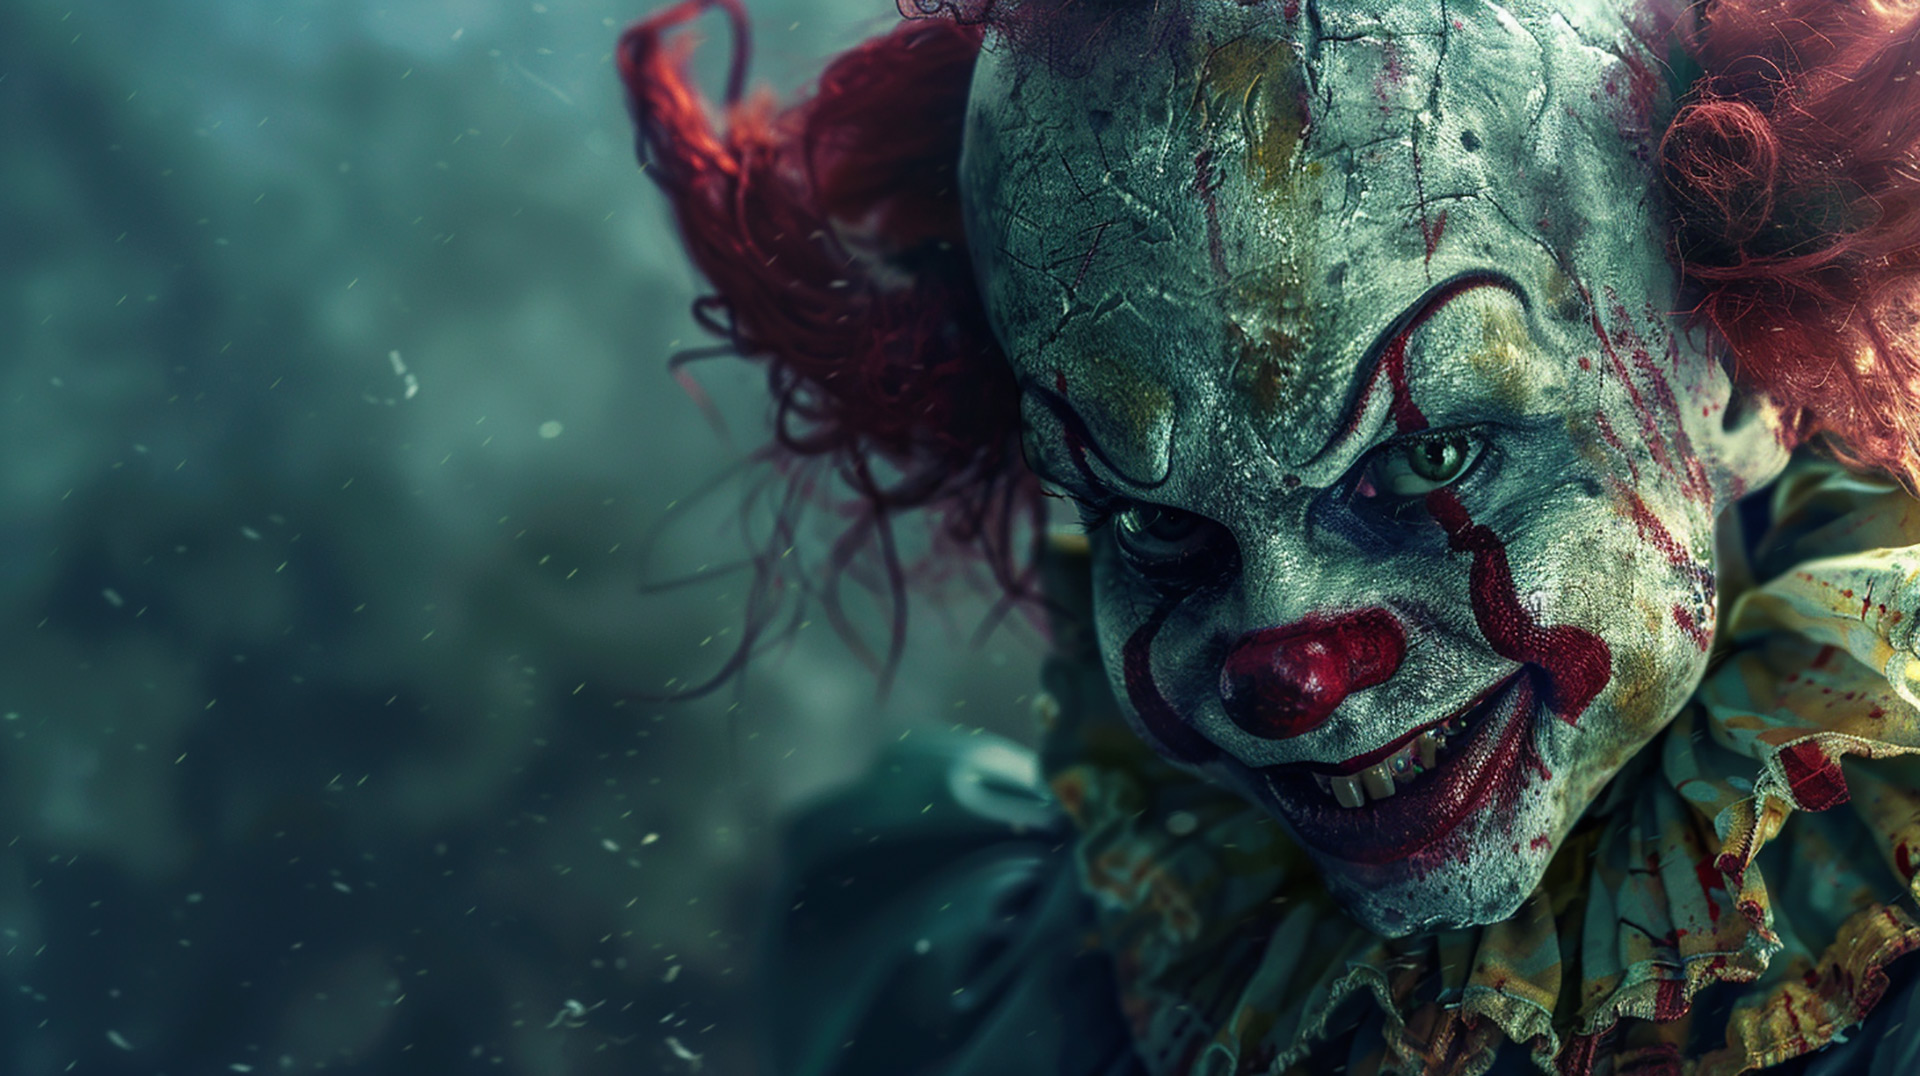 Creepy Clown Wallpaper: HD Download for Desktop